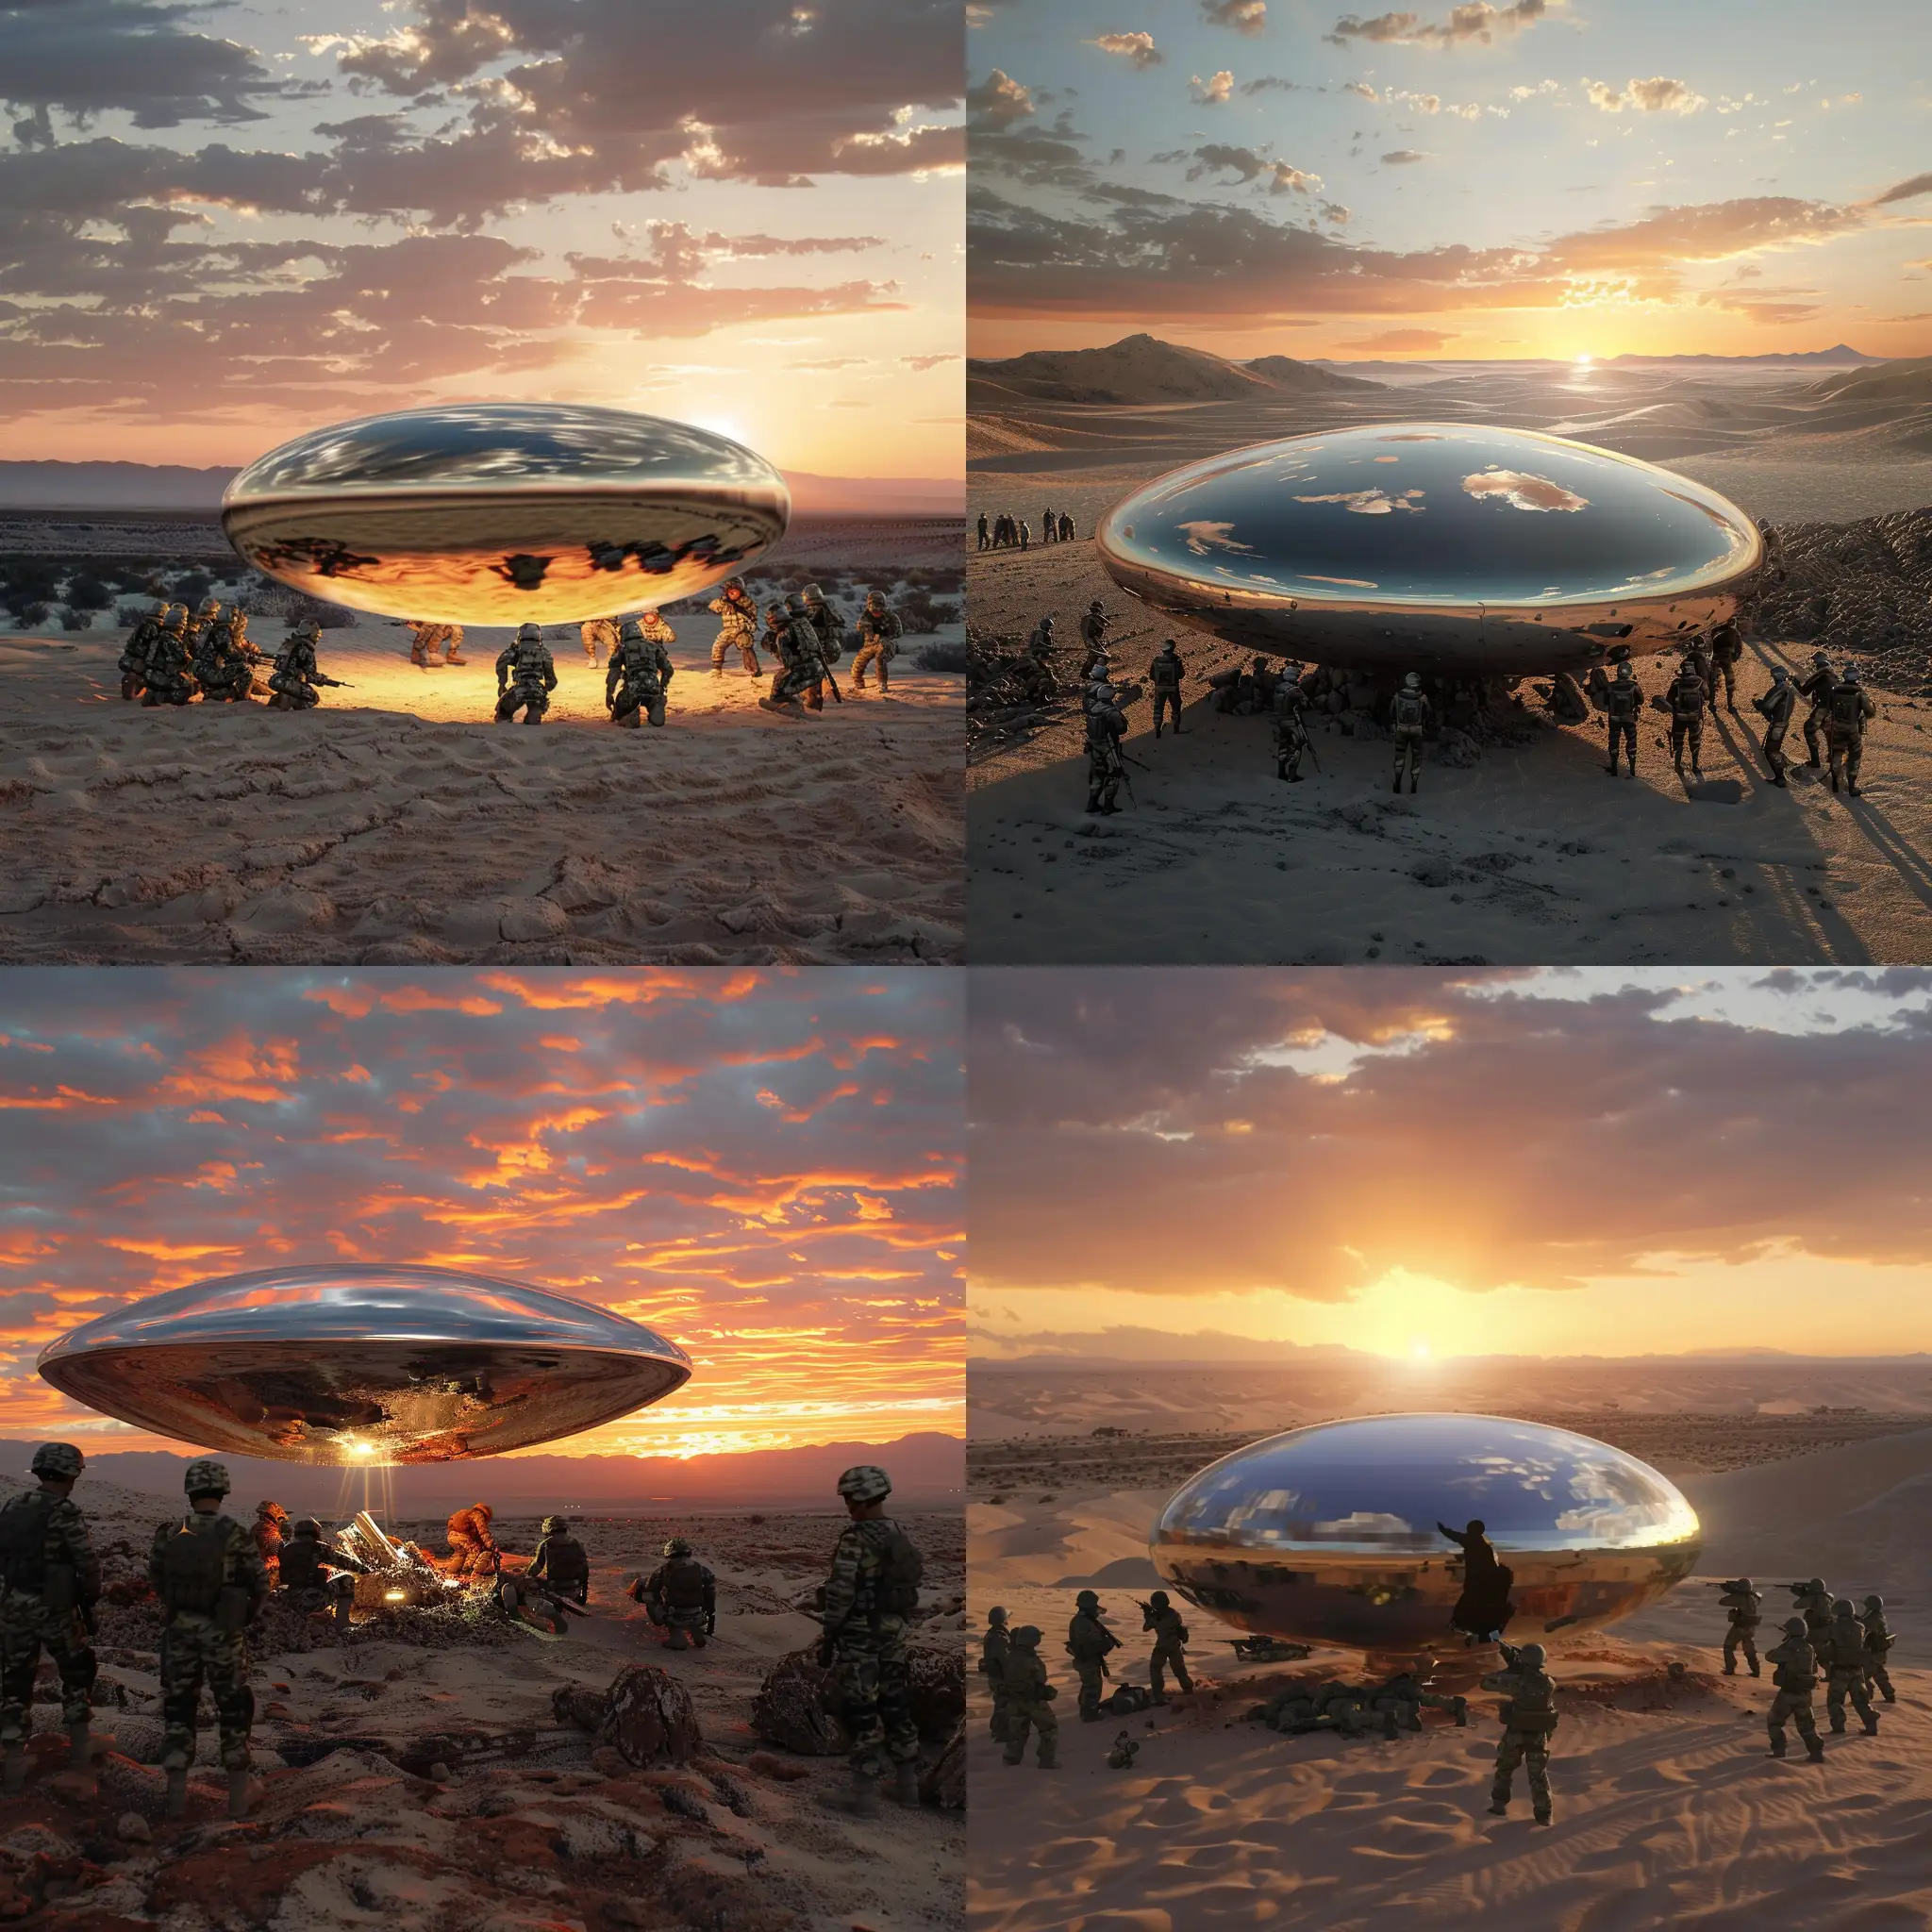 Shiny metallic Flying saucer crash in desert, soldiers surrounding it, sunset photo